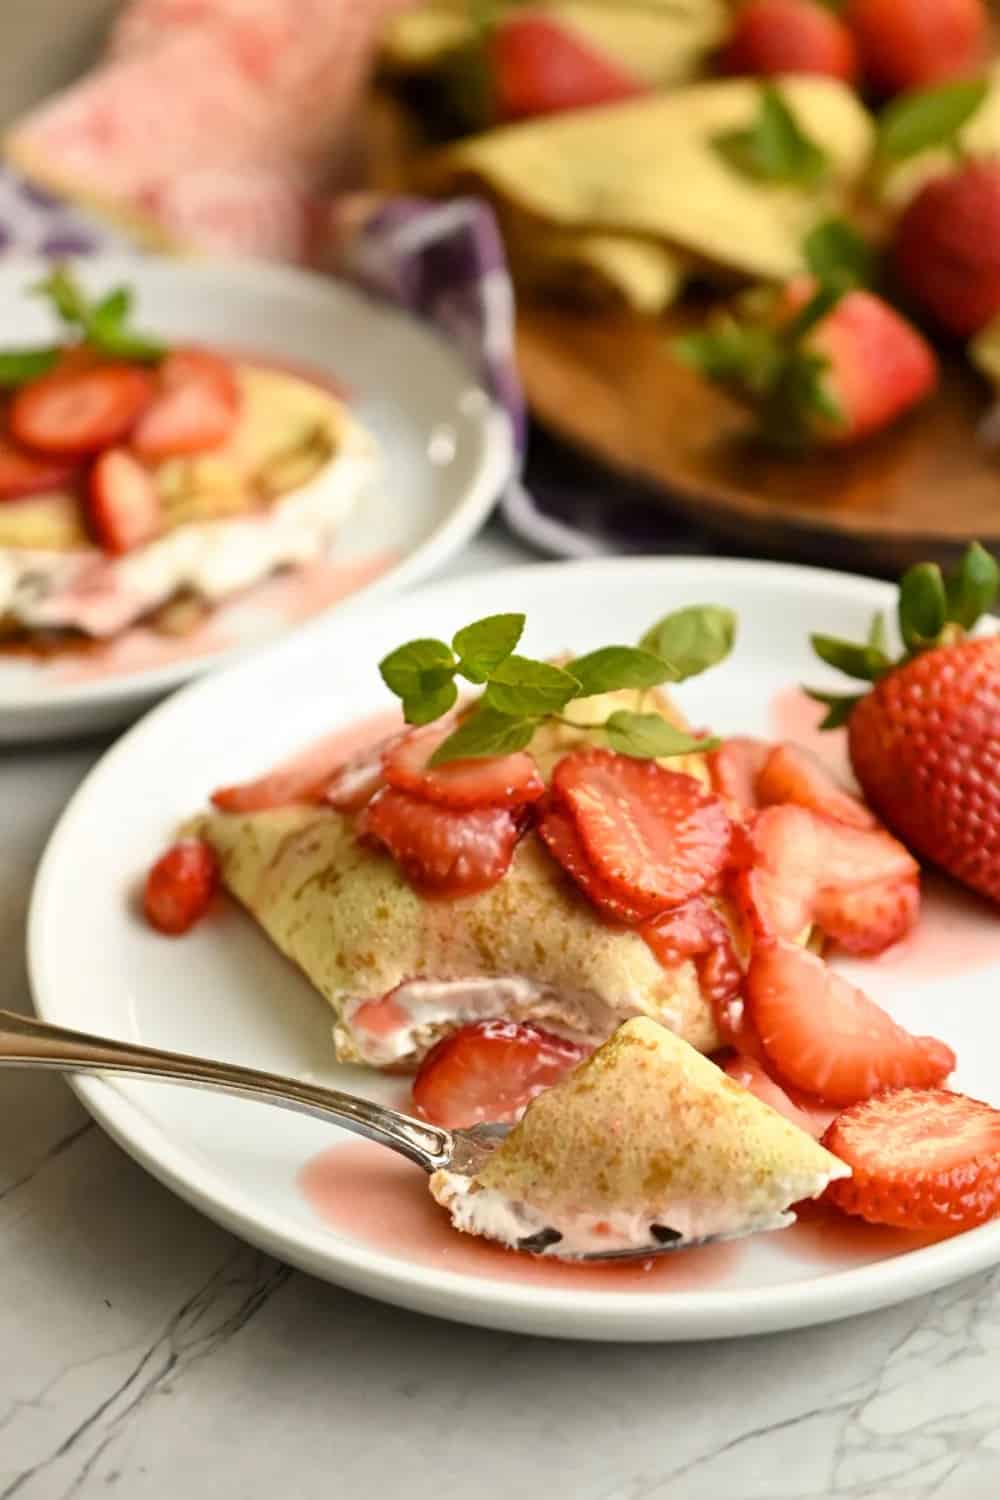 Strawberry crepes served on elegant white plates